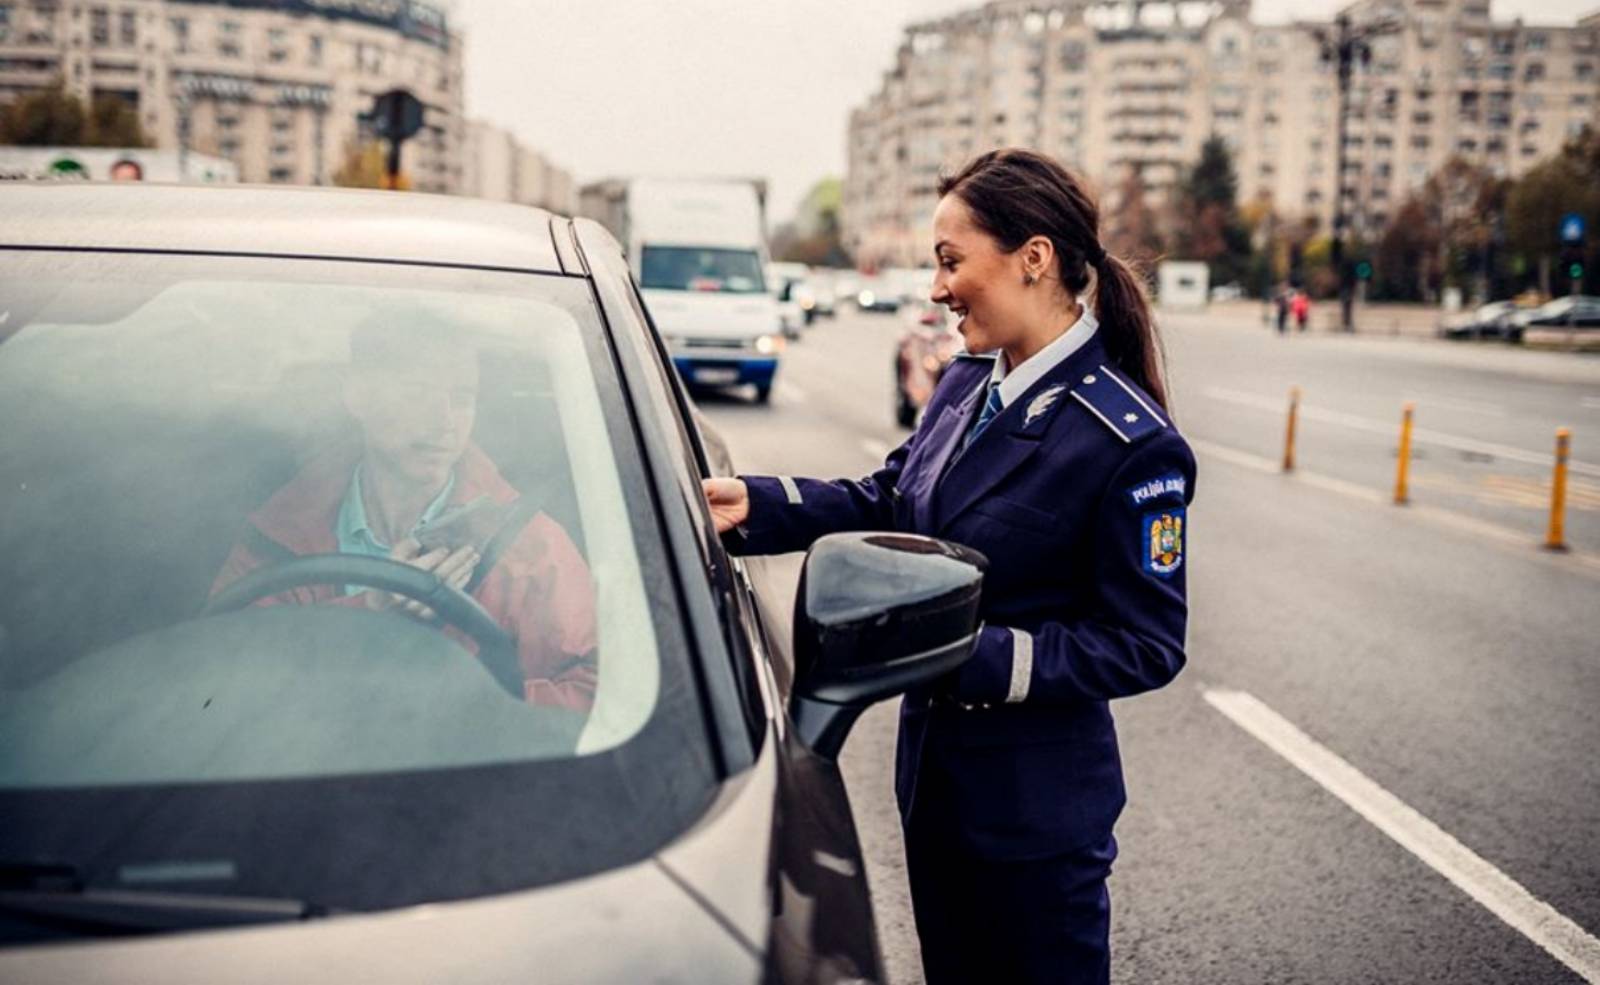 Romanian Police driving tests Coronavirus